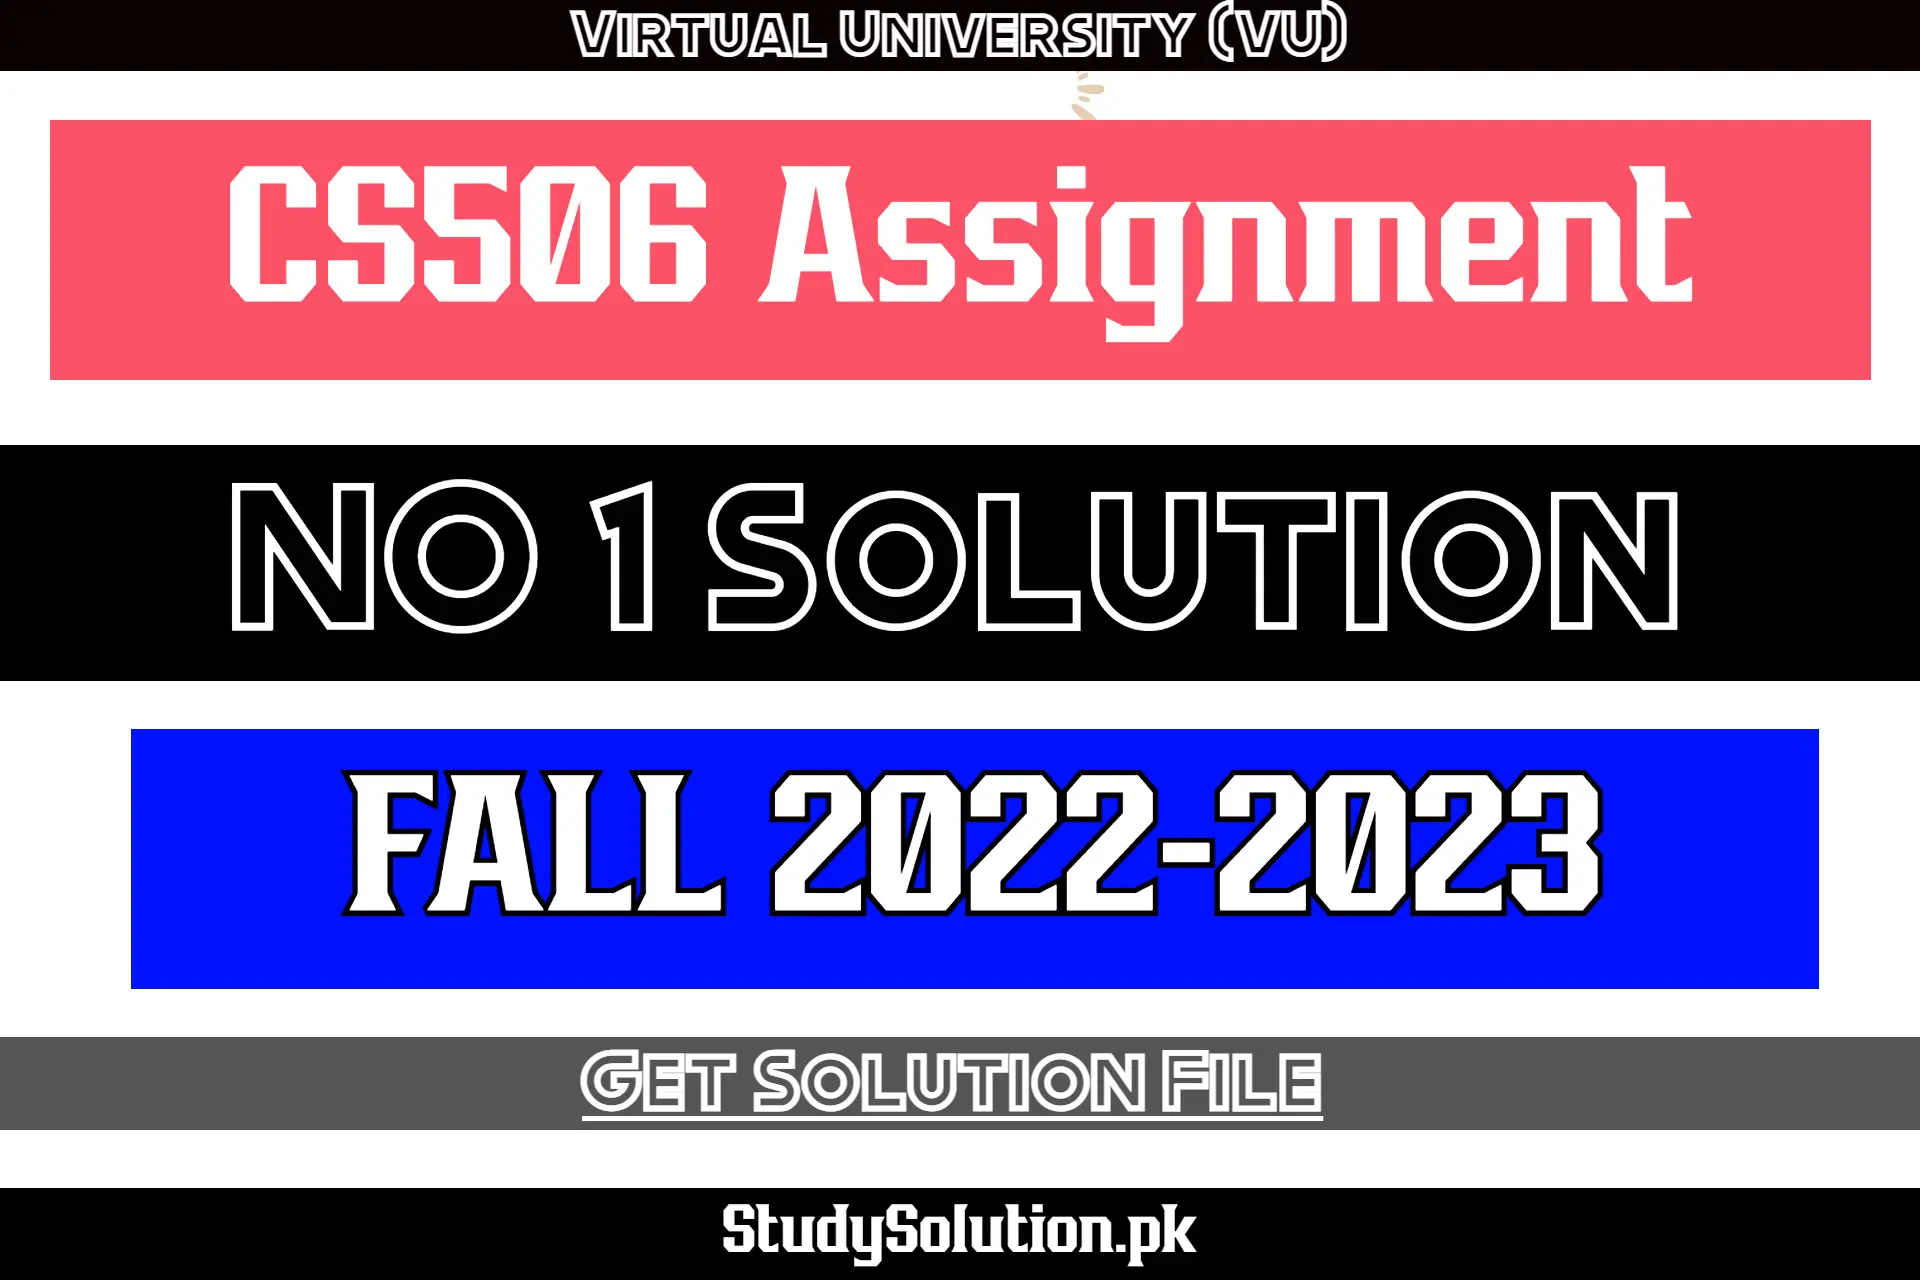 CS506 Assignment No 1 Solution Fall 2022